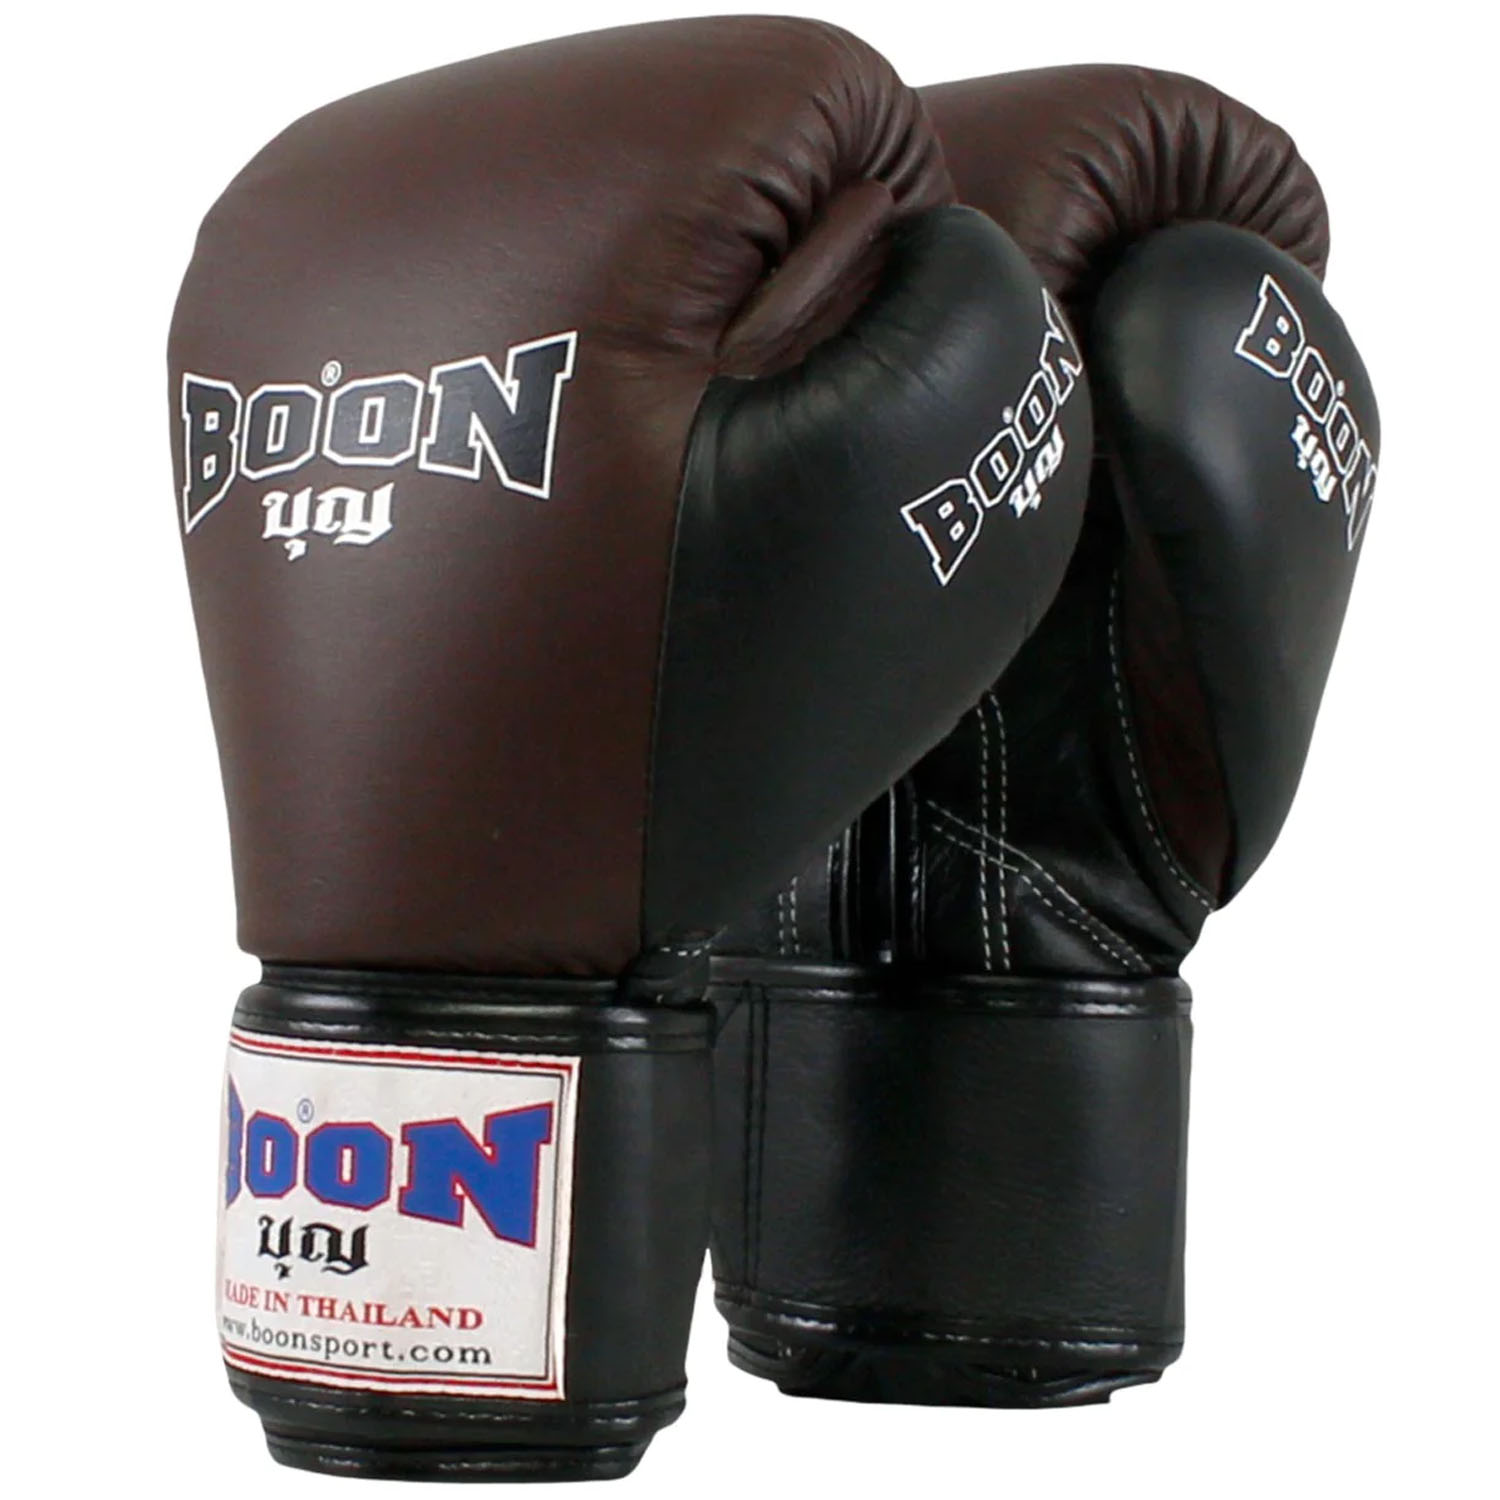 BOON Boxing Gloves, BGCBK, Compact Velcro, brown-black, 14 Oz